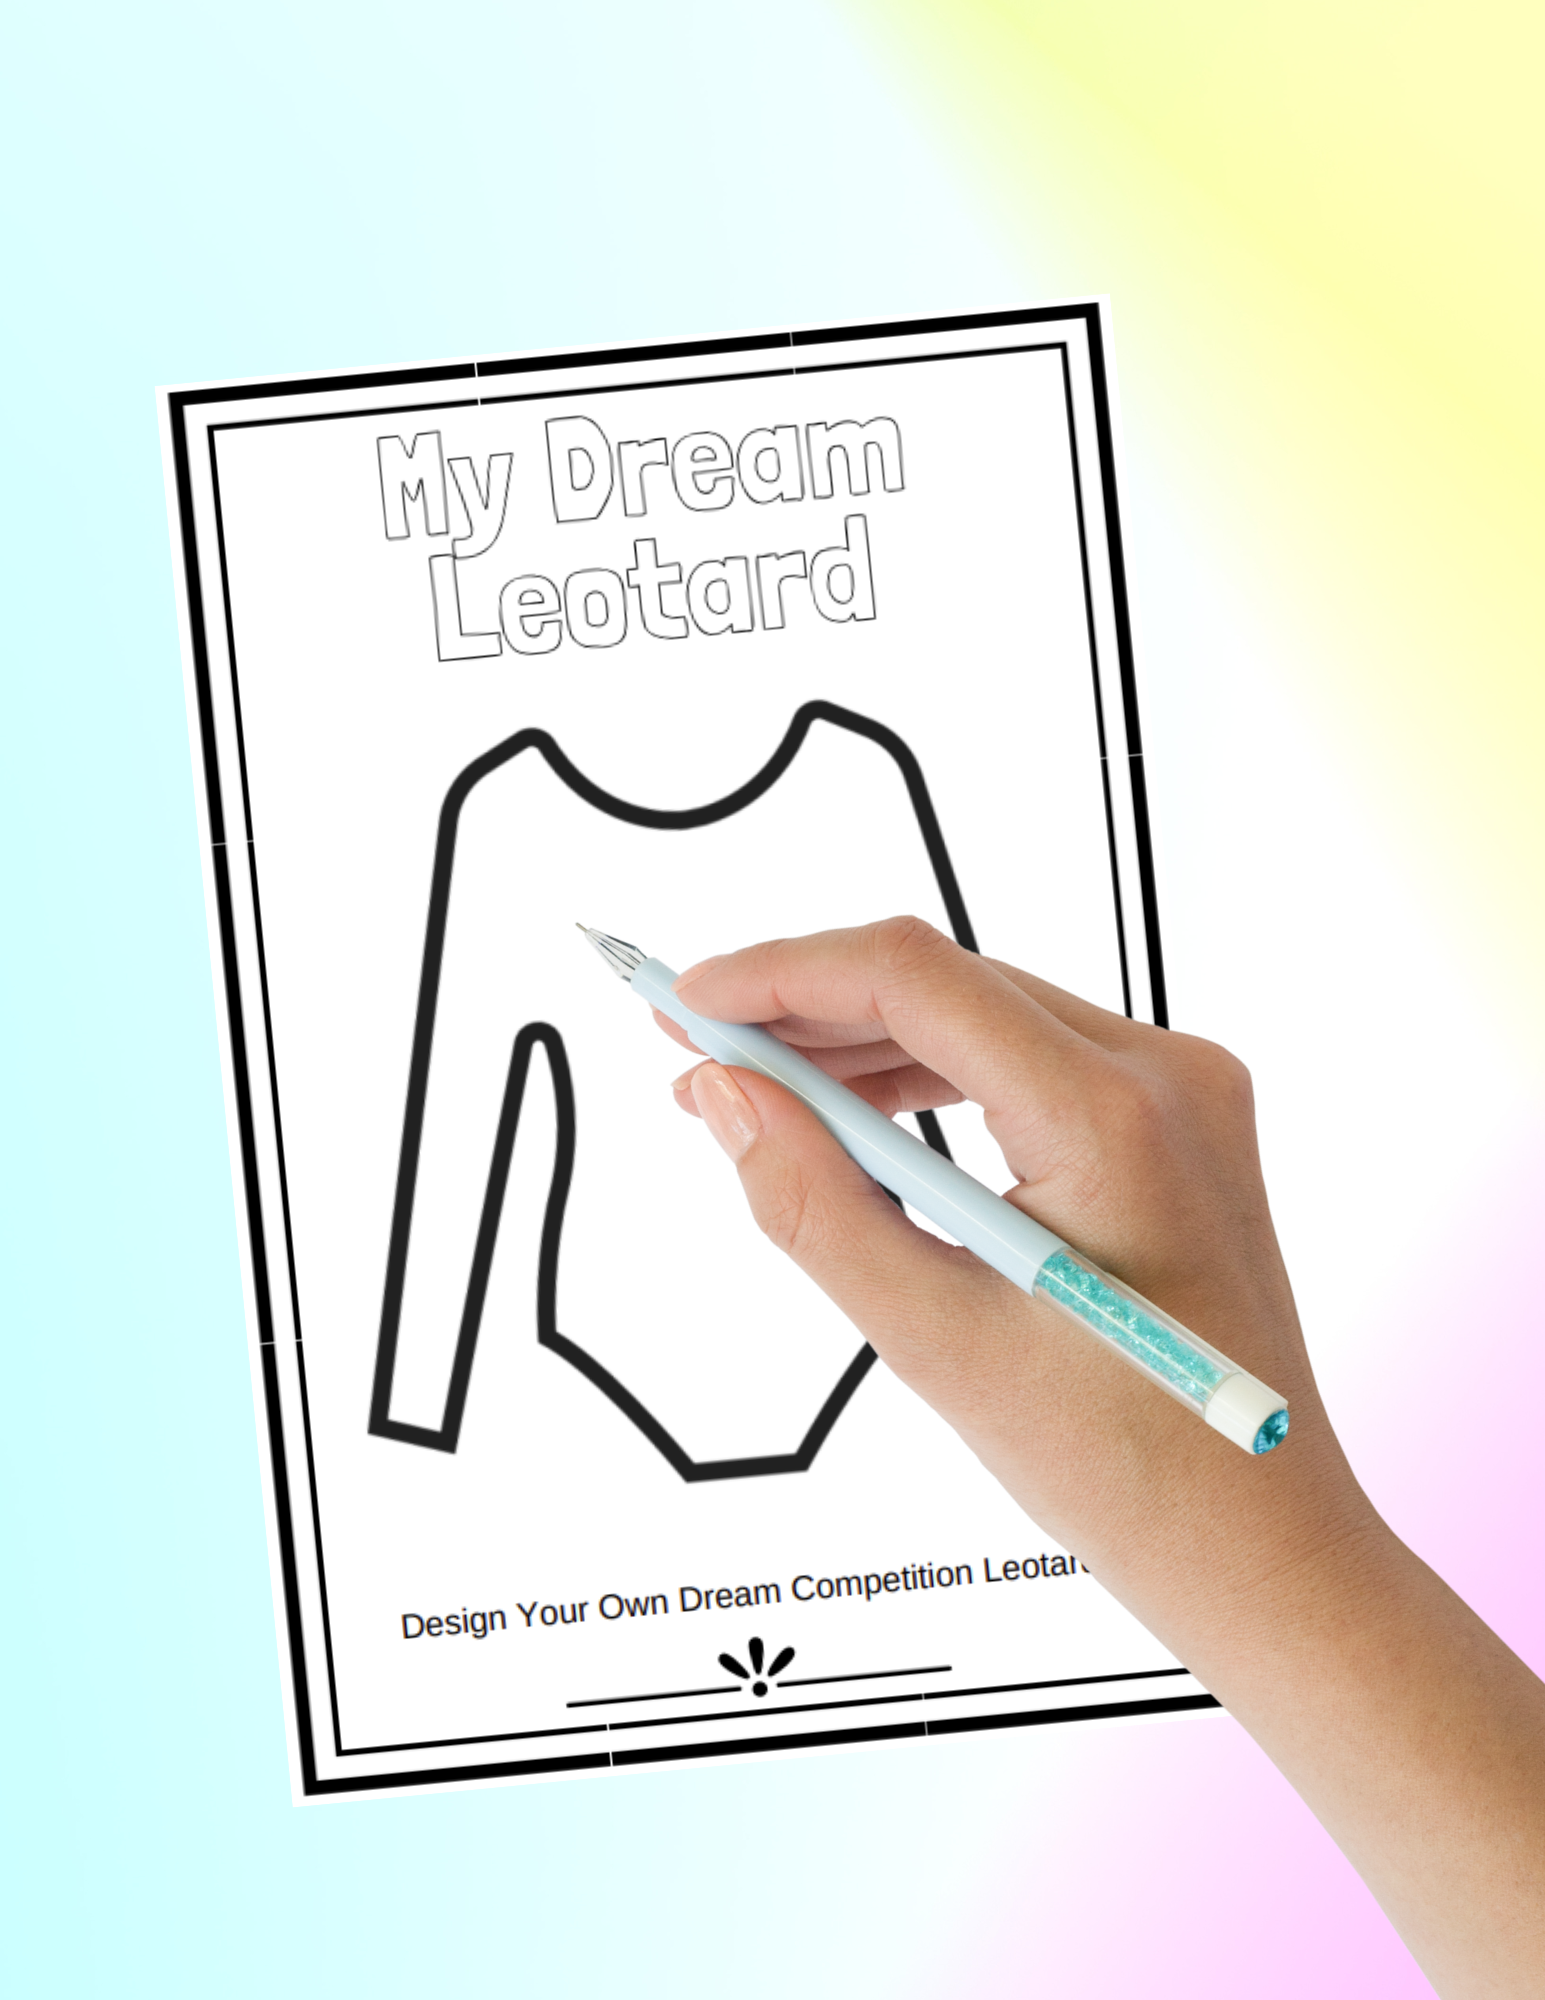 GymnasticsHQ's Digital Confident Gymnast Coloring Book